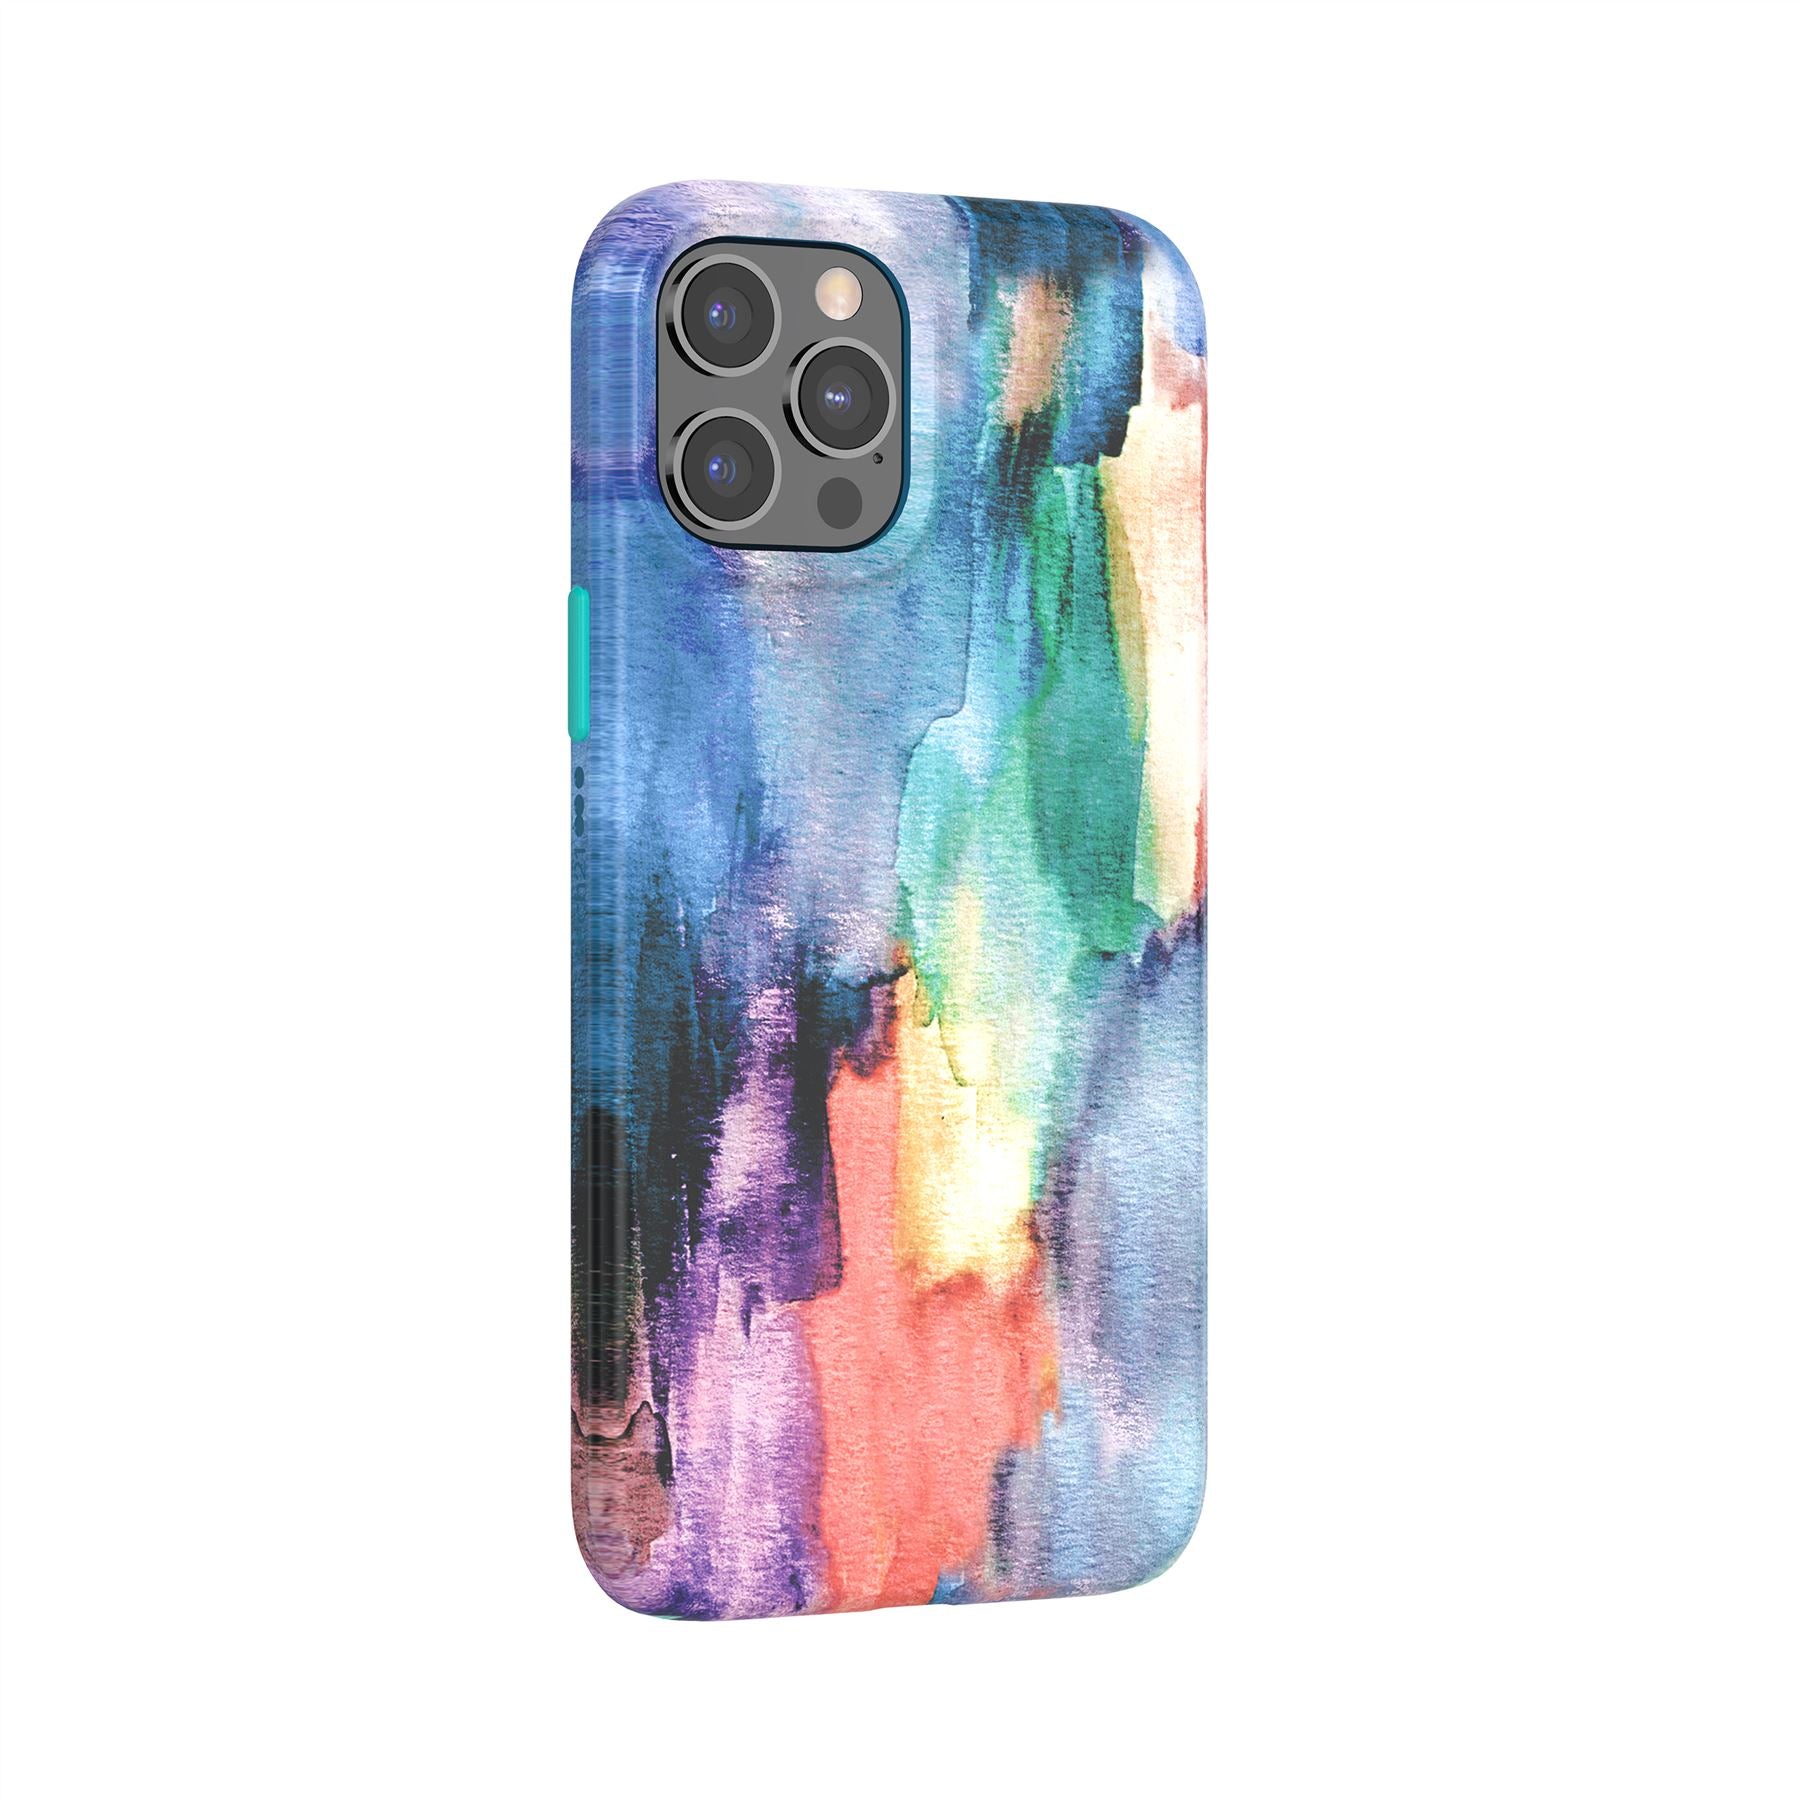 Eco Art - Apple iPhone 12 Pro Max Case - Multi